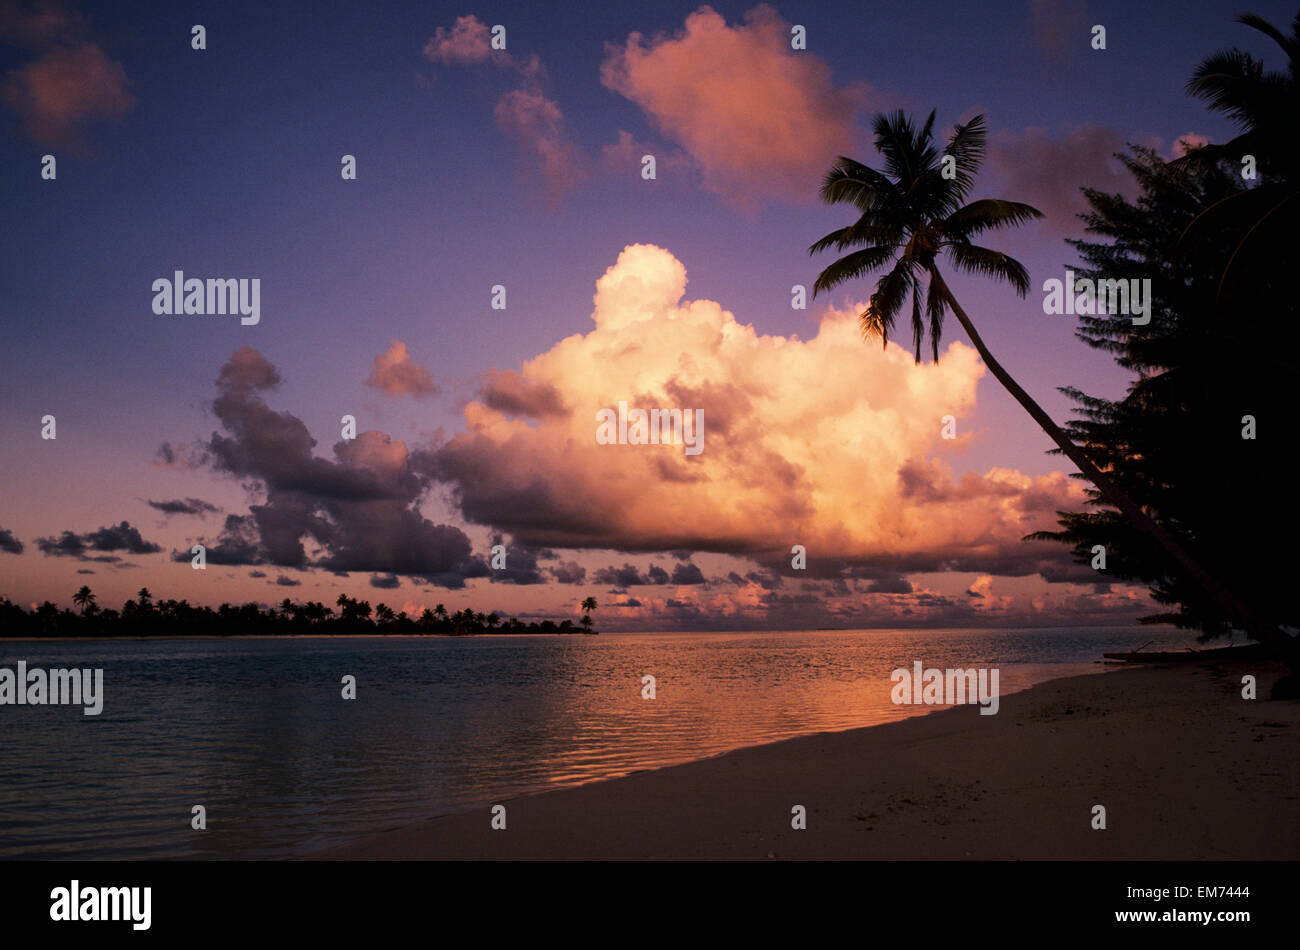 French Polynesia, Tetiaroa (Marlon Brando's Island), Beautiful Beach With Palm Tree At Sunset. Stock Photo